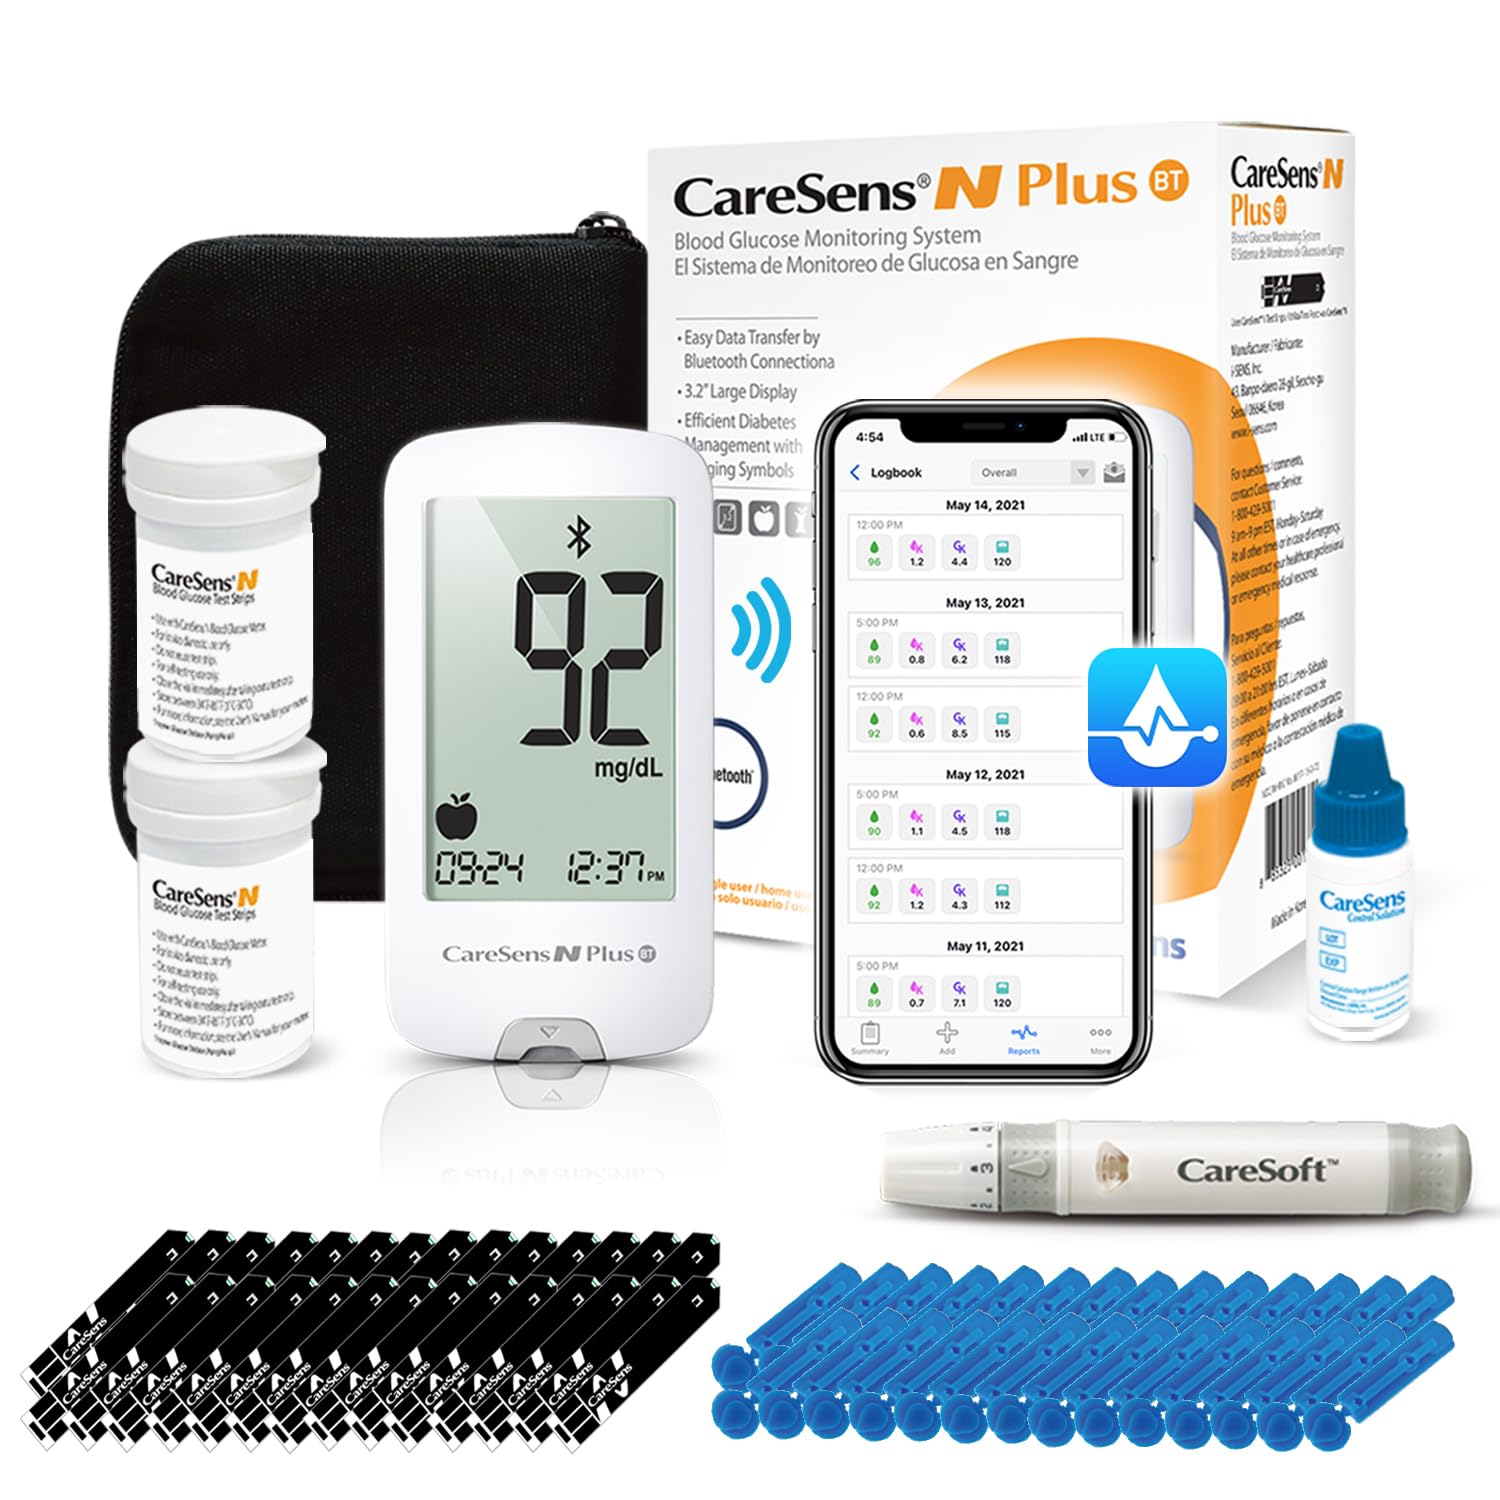 CareSens N Plus Bluetooth Blood Glucose Monitor Kit with 100 Test Strips, 100 Lancets, 1 Blood Glucose Meter, 1 Lancing Device, 